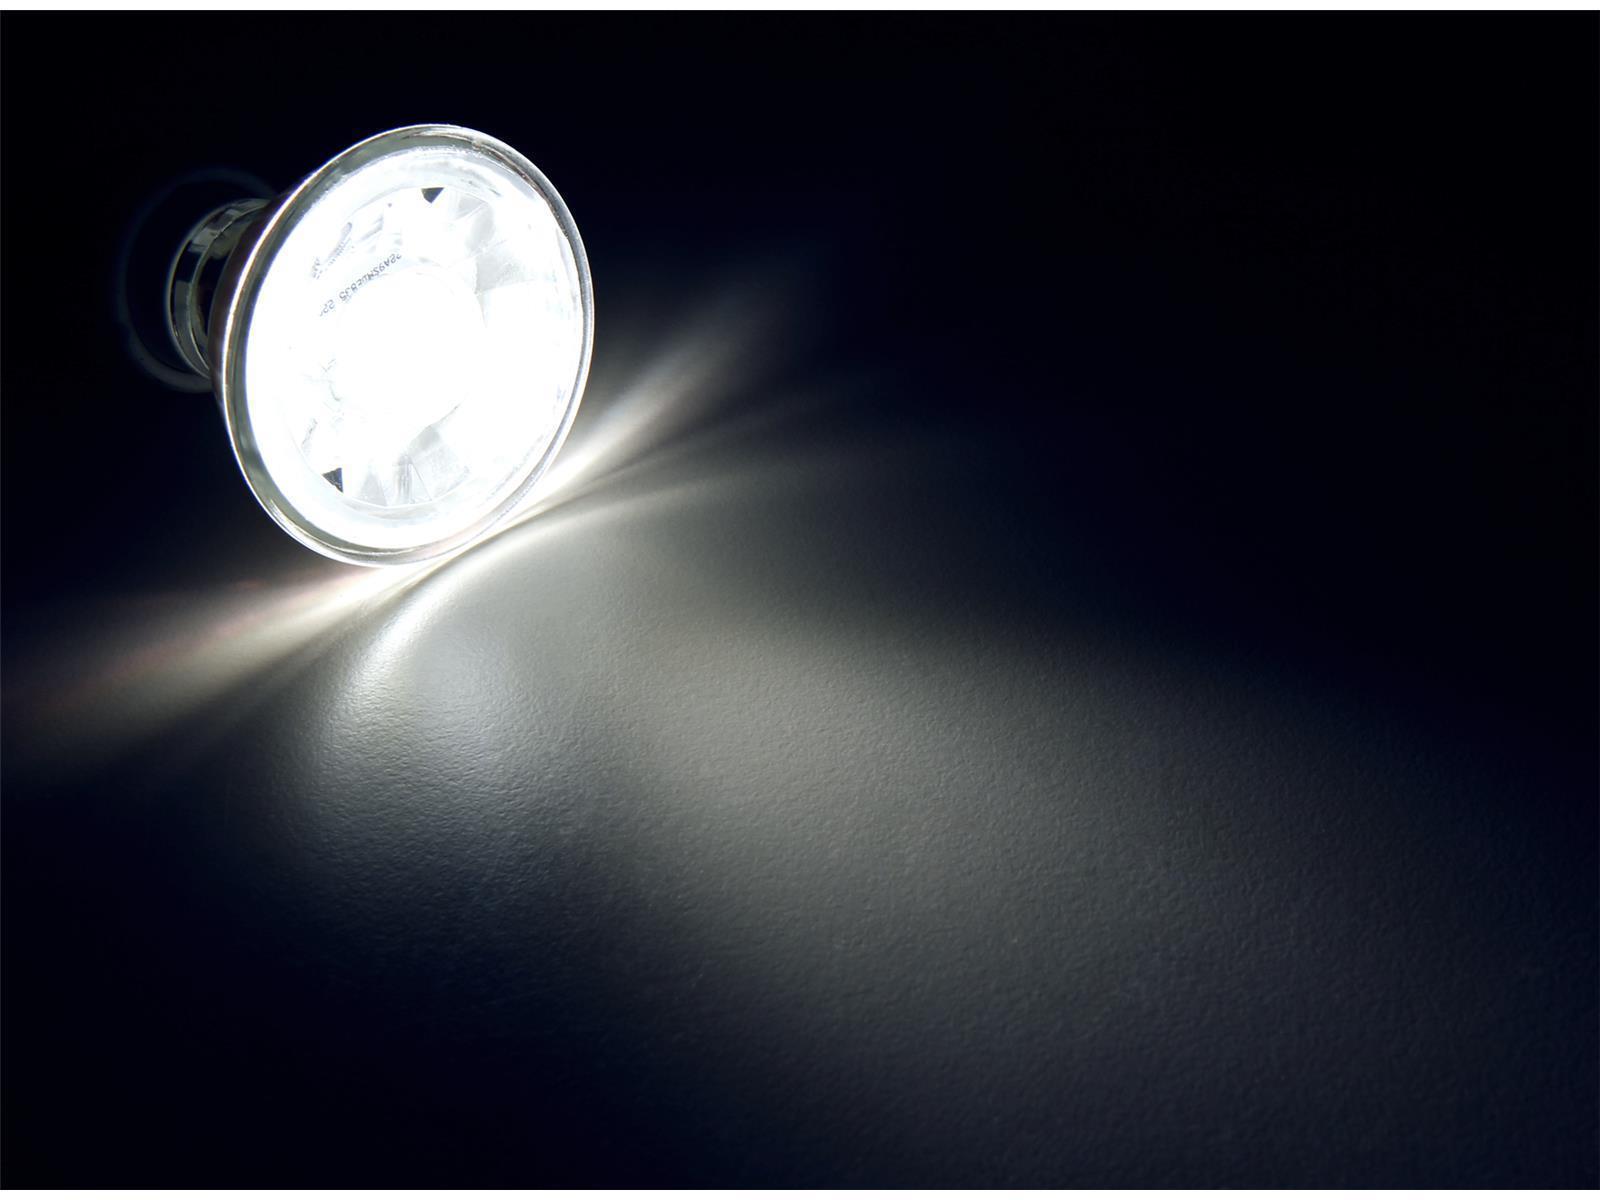 LED-Strahler McShine ''MCOB'' MR16, 3W, 250 lm, neutralweiß